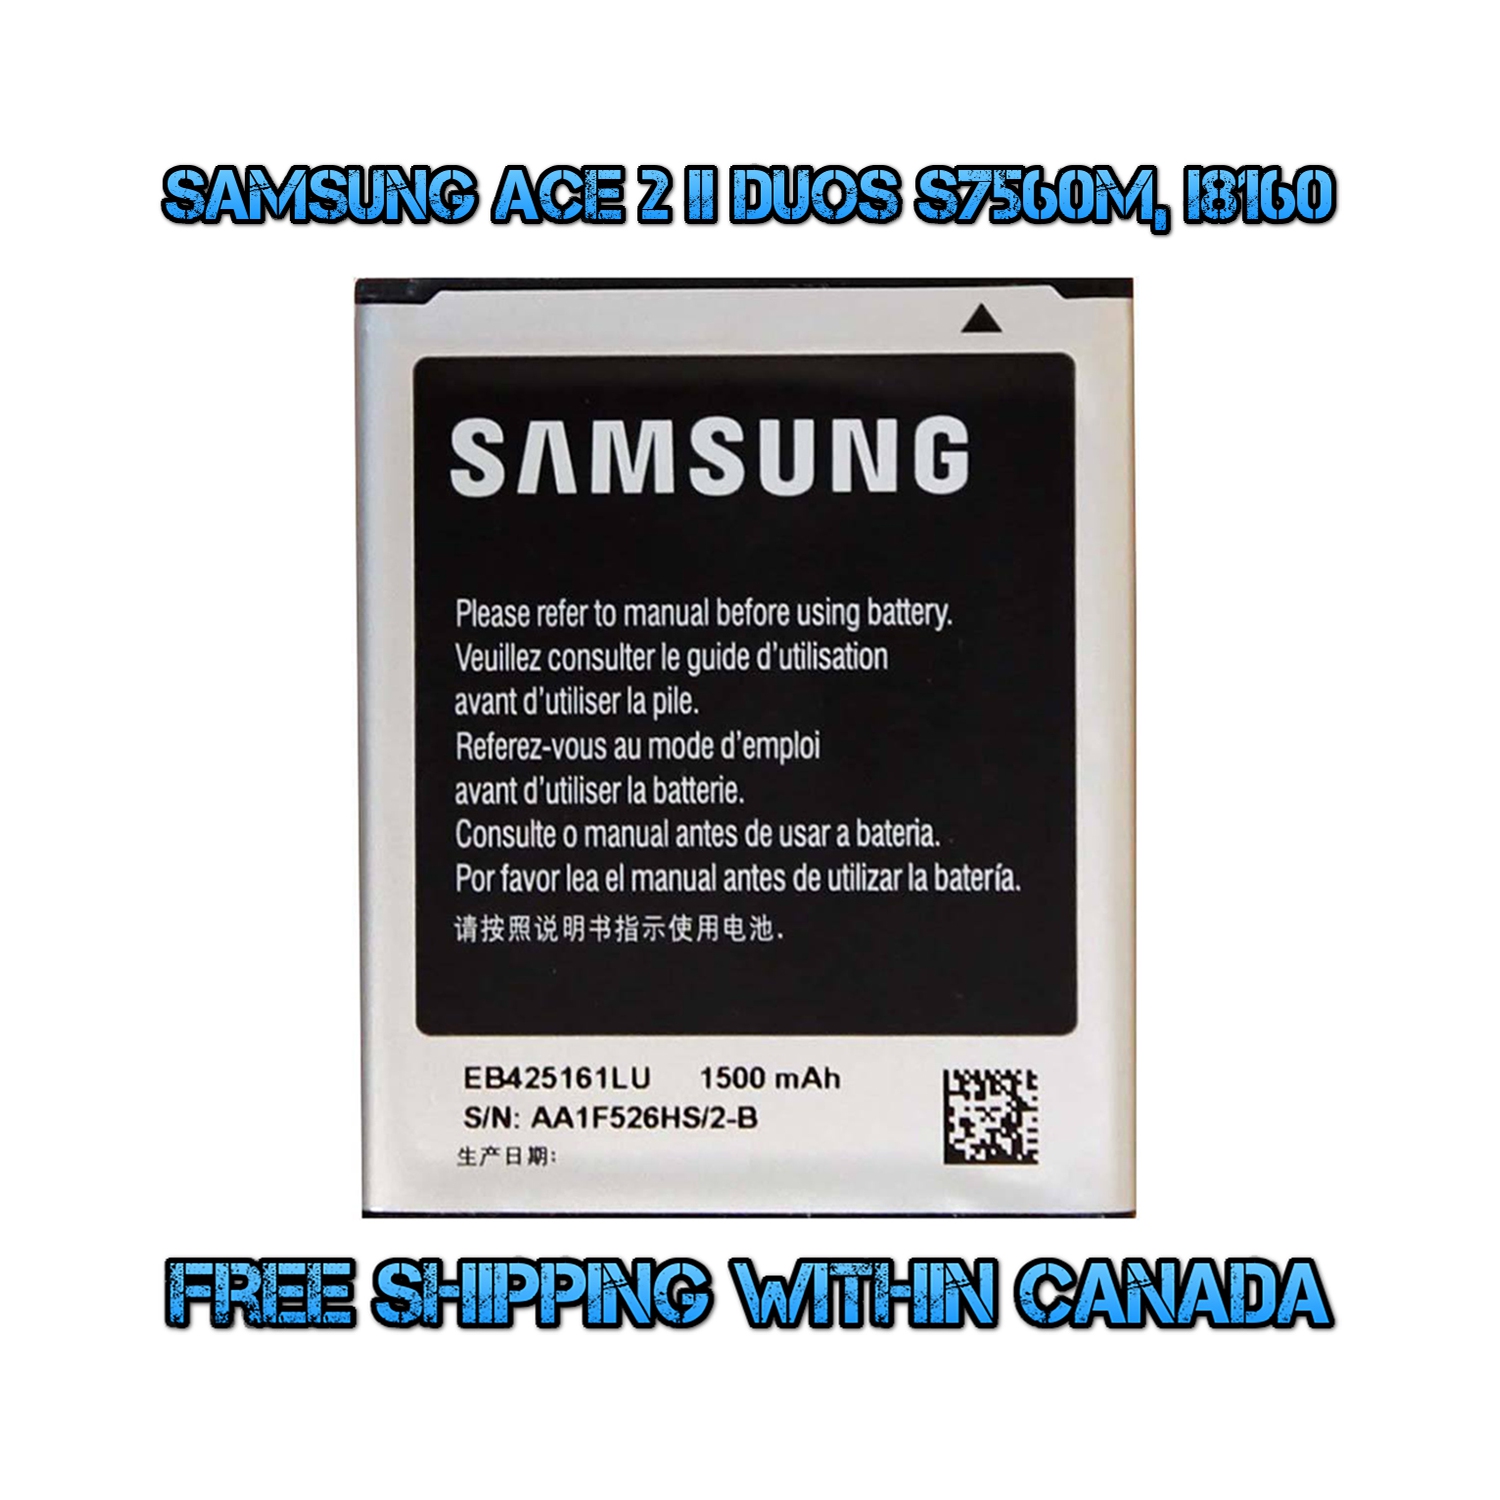 Original Samsung EB425161LU battery for Galaxy Ace 2 II Duos GT-S7560M GT-i8160